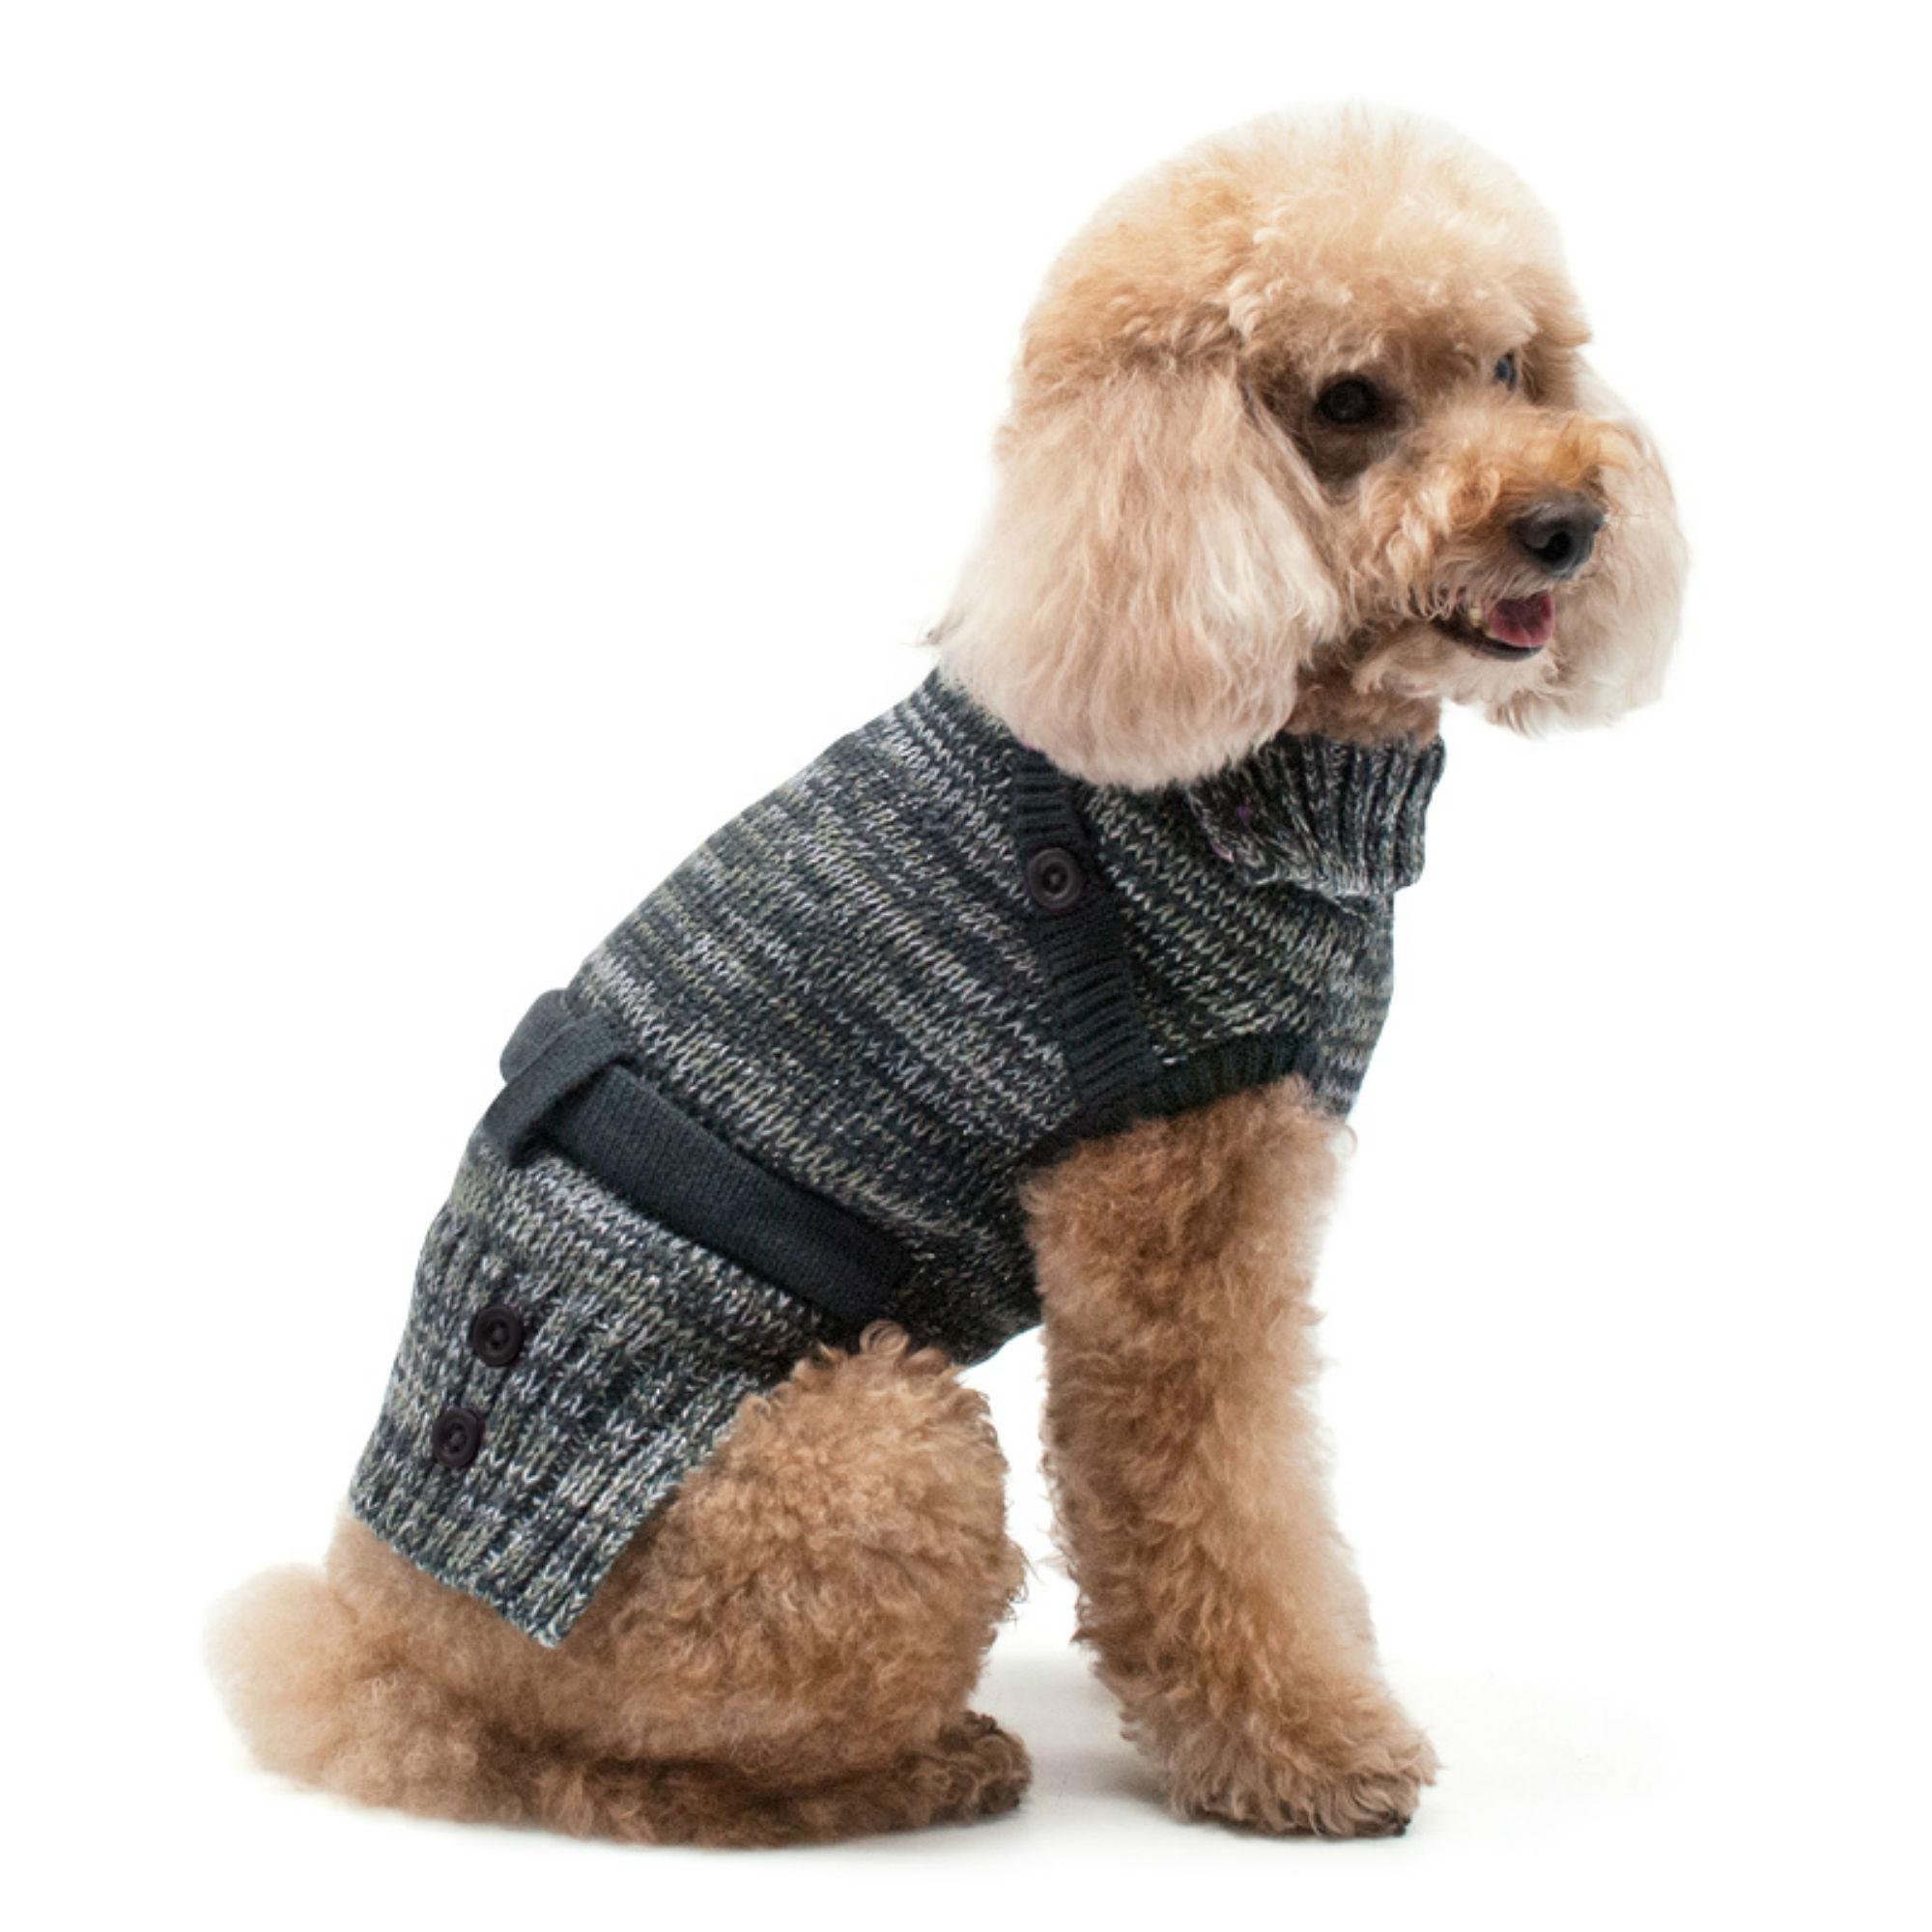 Multiway Turtleneck Dog Sweater by Dogo - Black